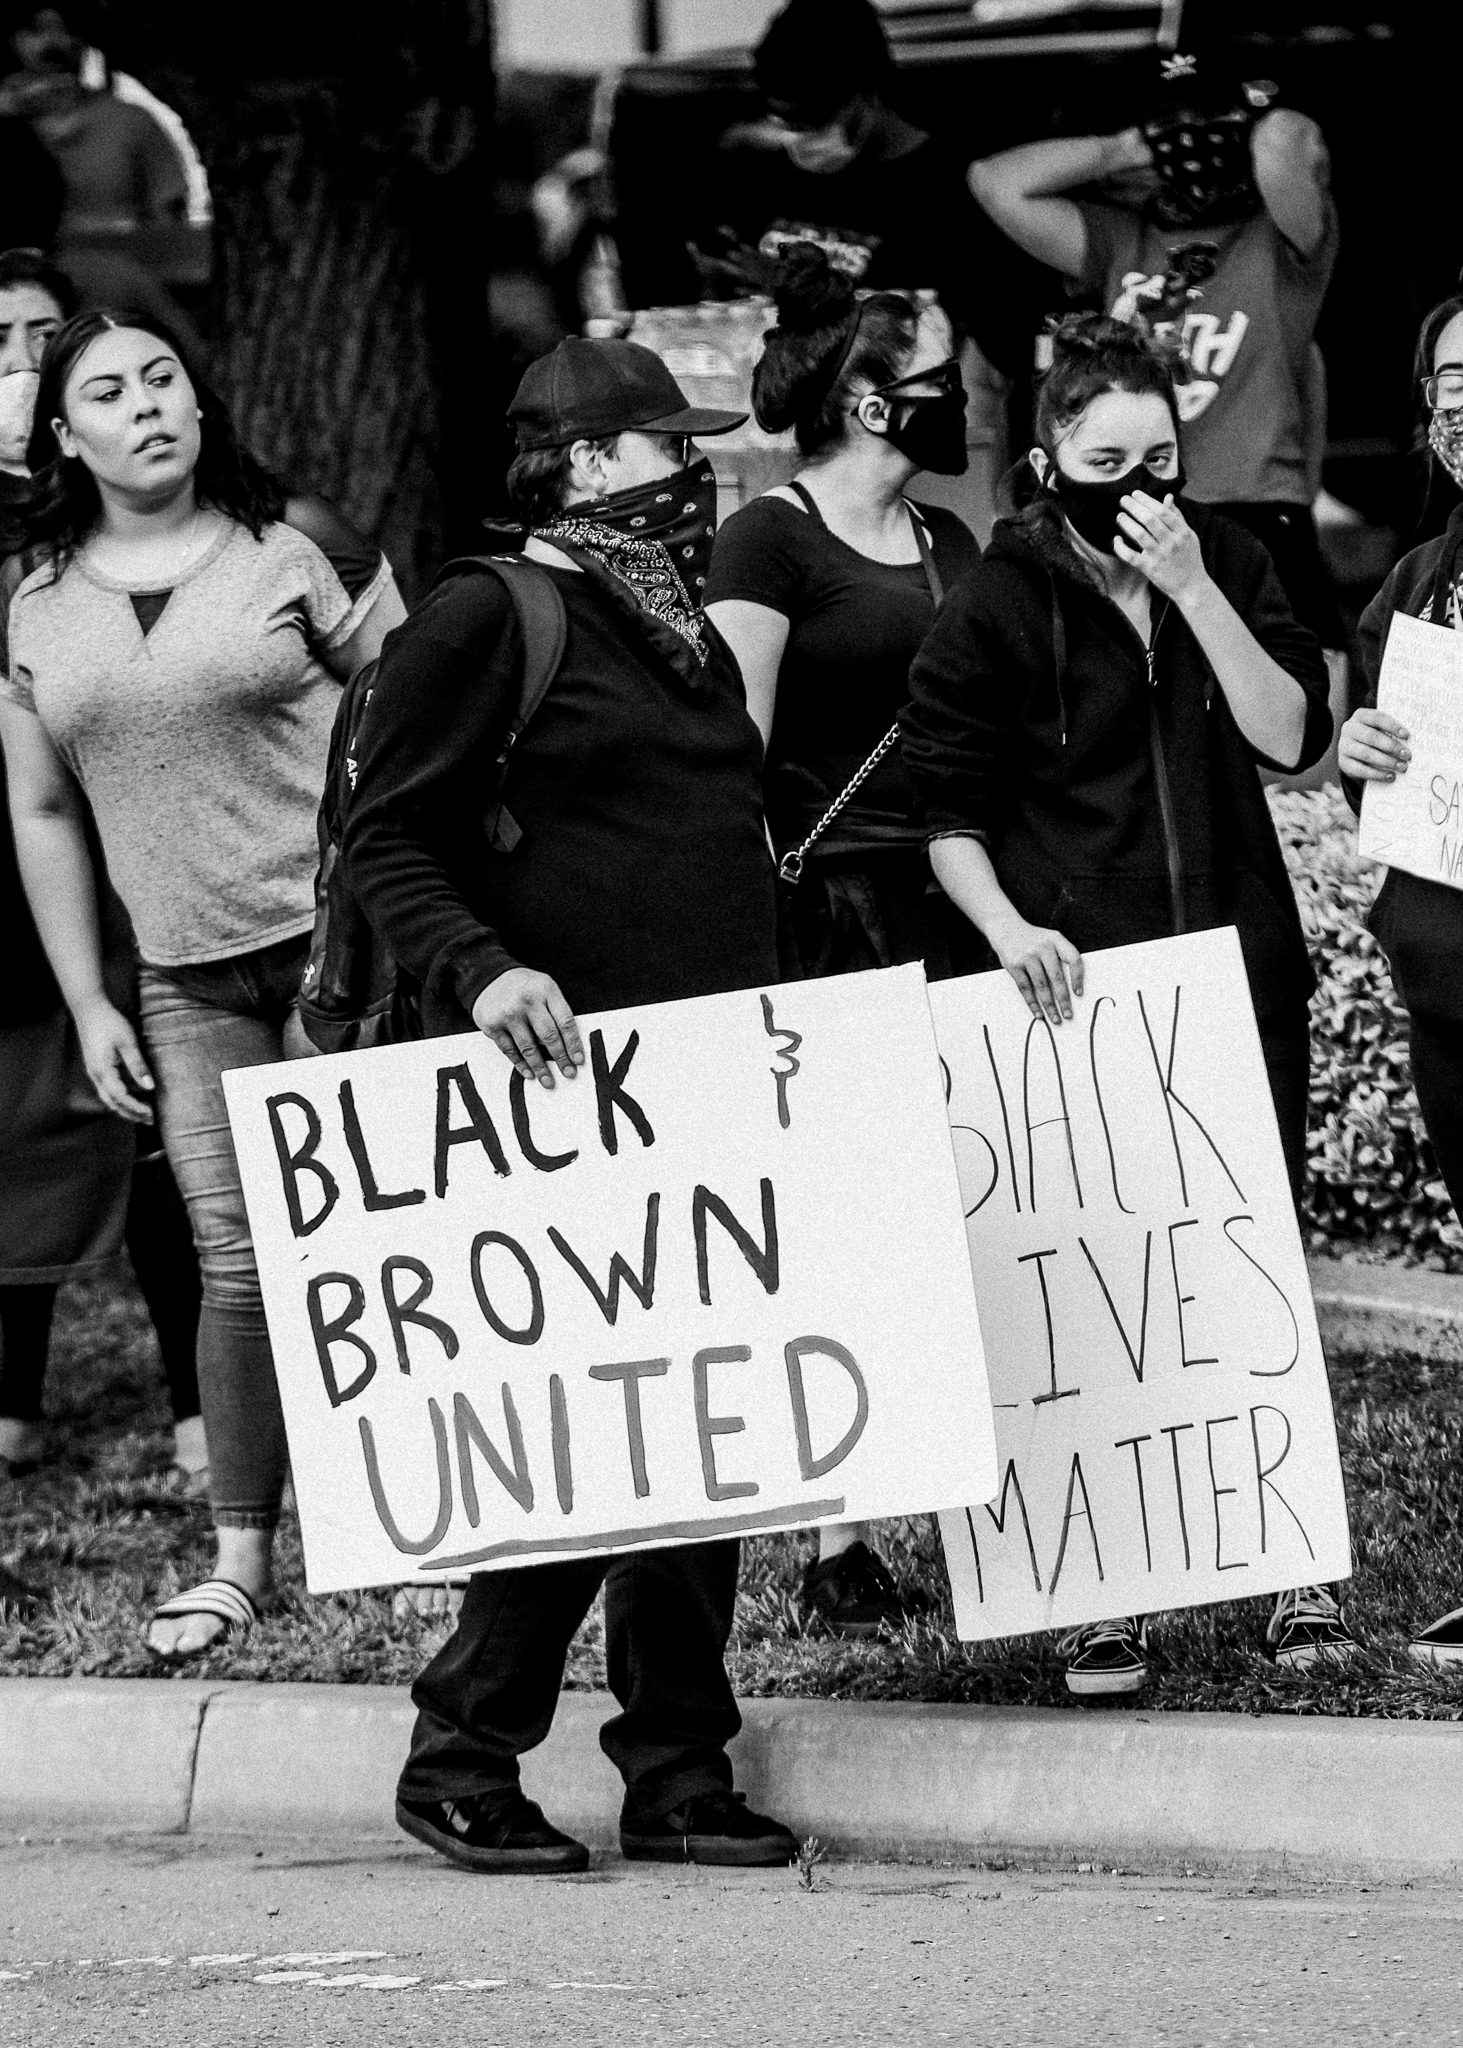 protest signs - black, brown, united and black lives matter